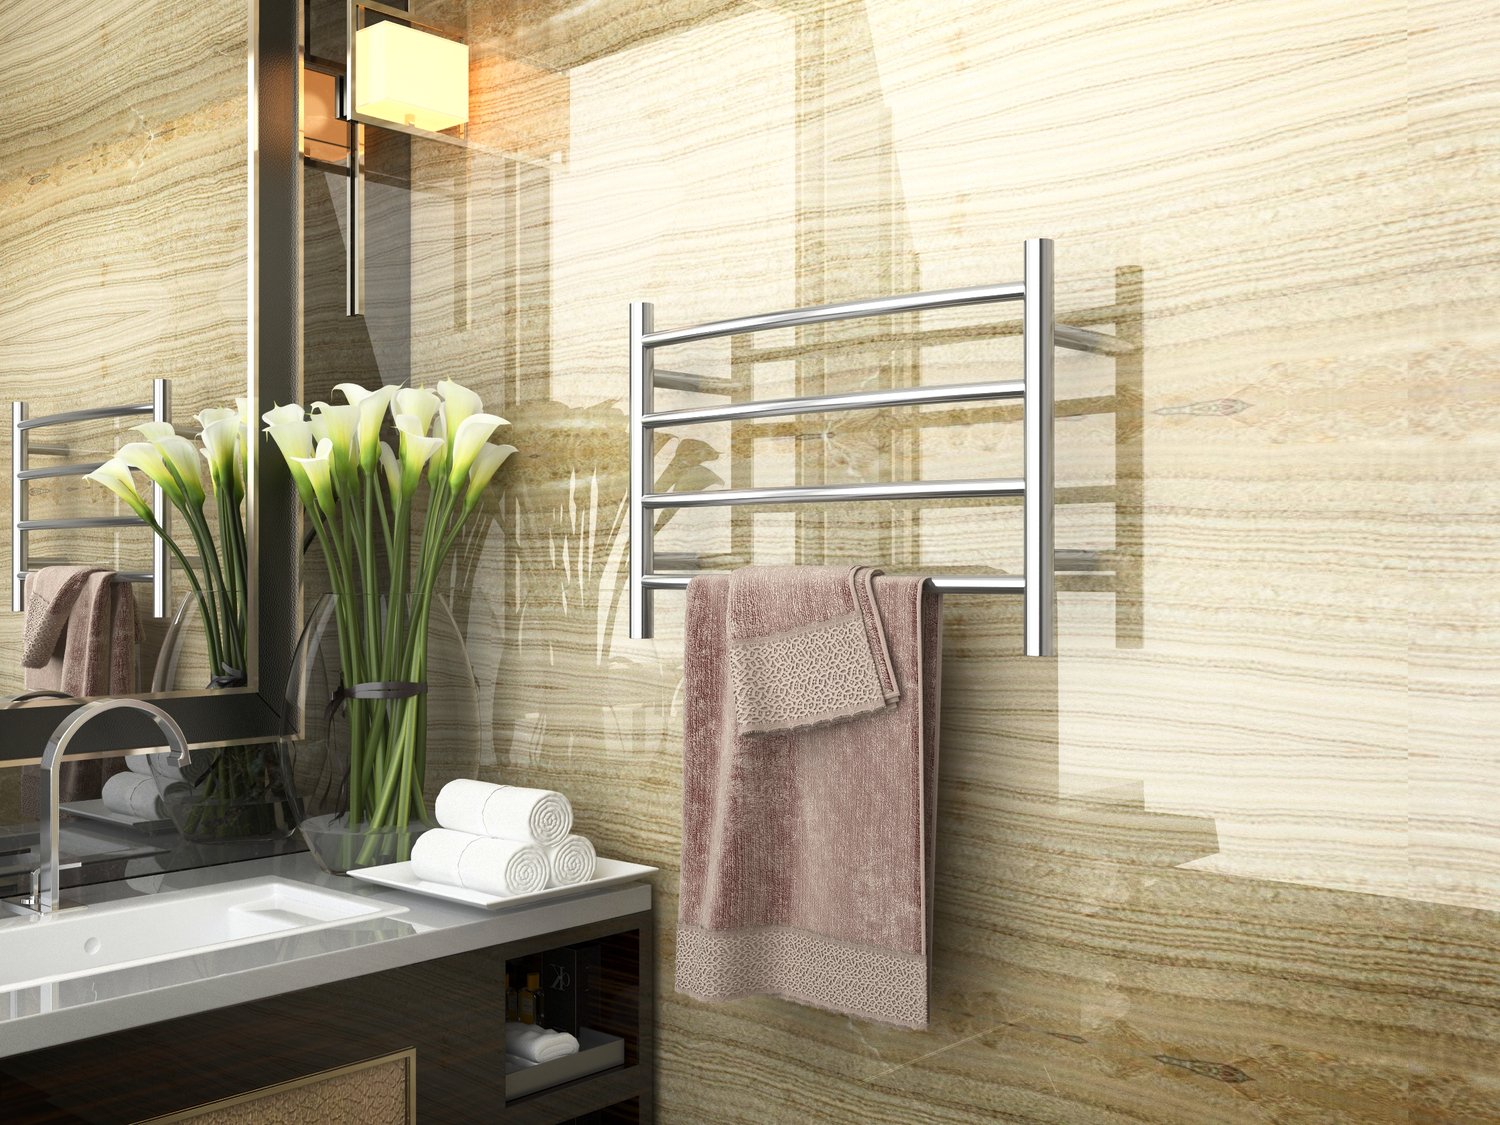 floor standing electric towel rail Anzzi BATHROOM - Towel Warmers - Wall Mounted Chrome